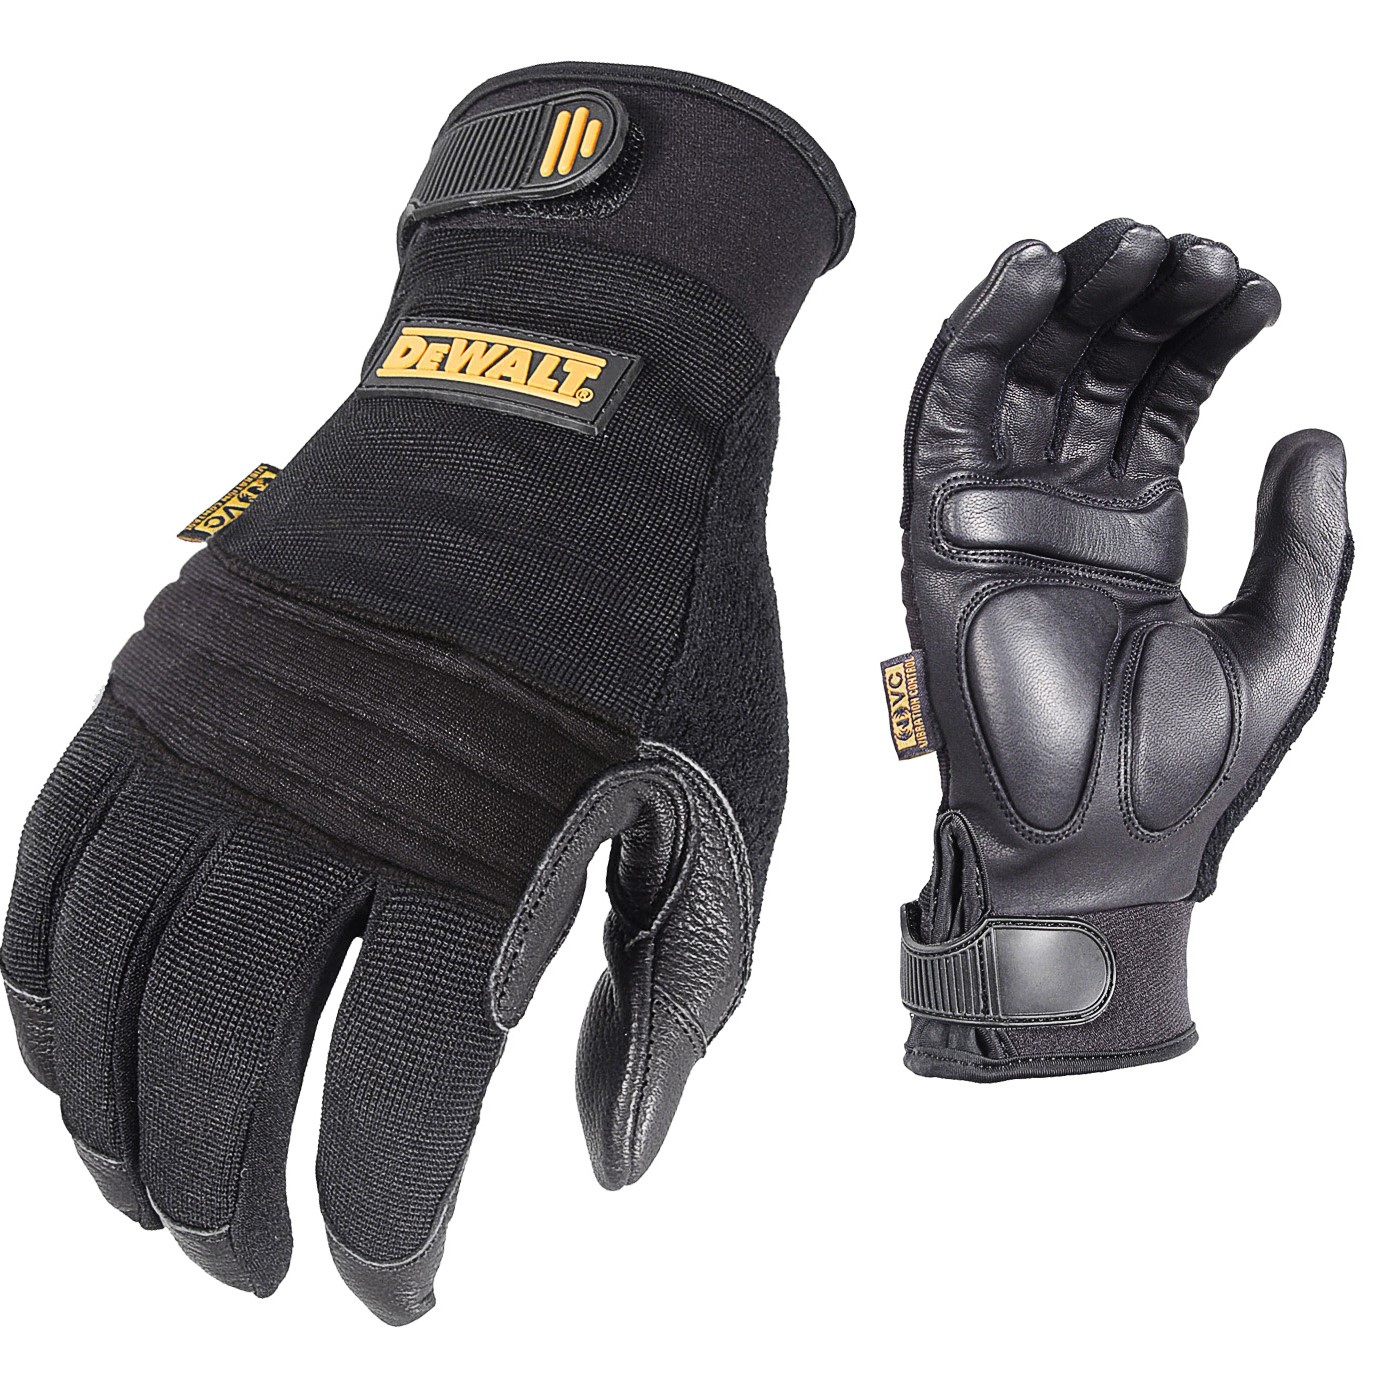 DPG250 Premium Padded Vibration Reducing Glove - Size XL